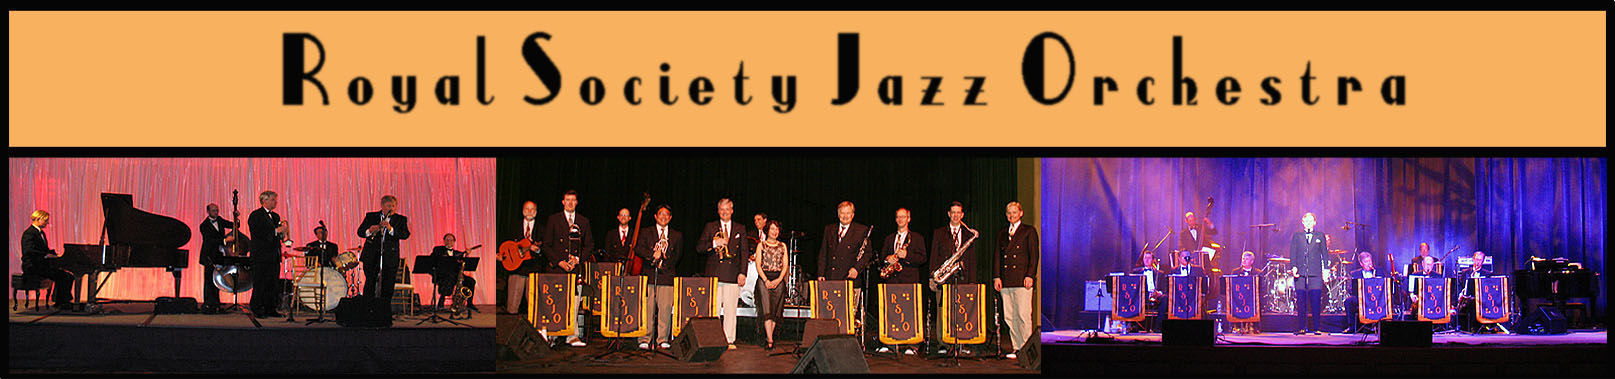 Royal Society Jazz Orchestra, big band swing, swing, 1920s jazz, traditional jazz, san francisco